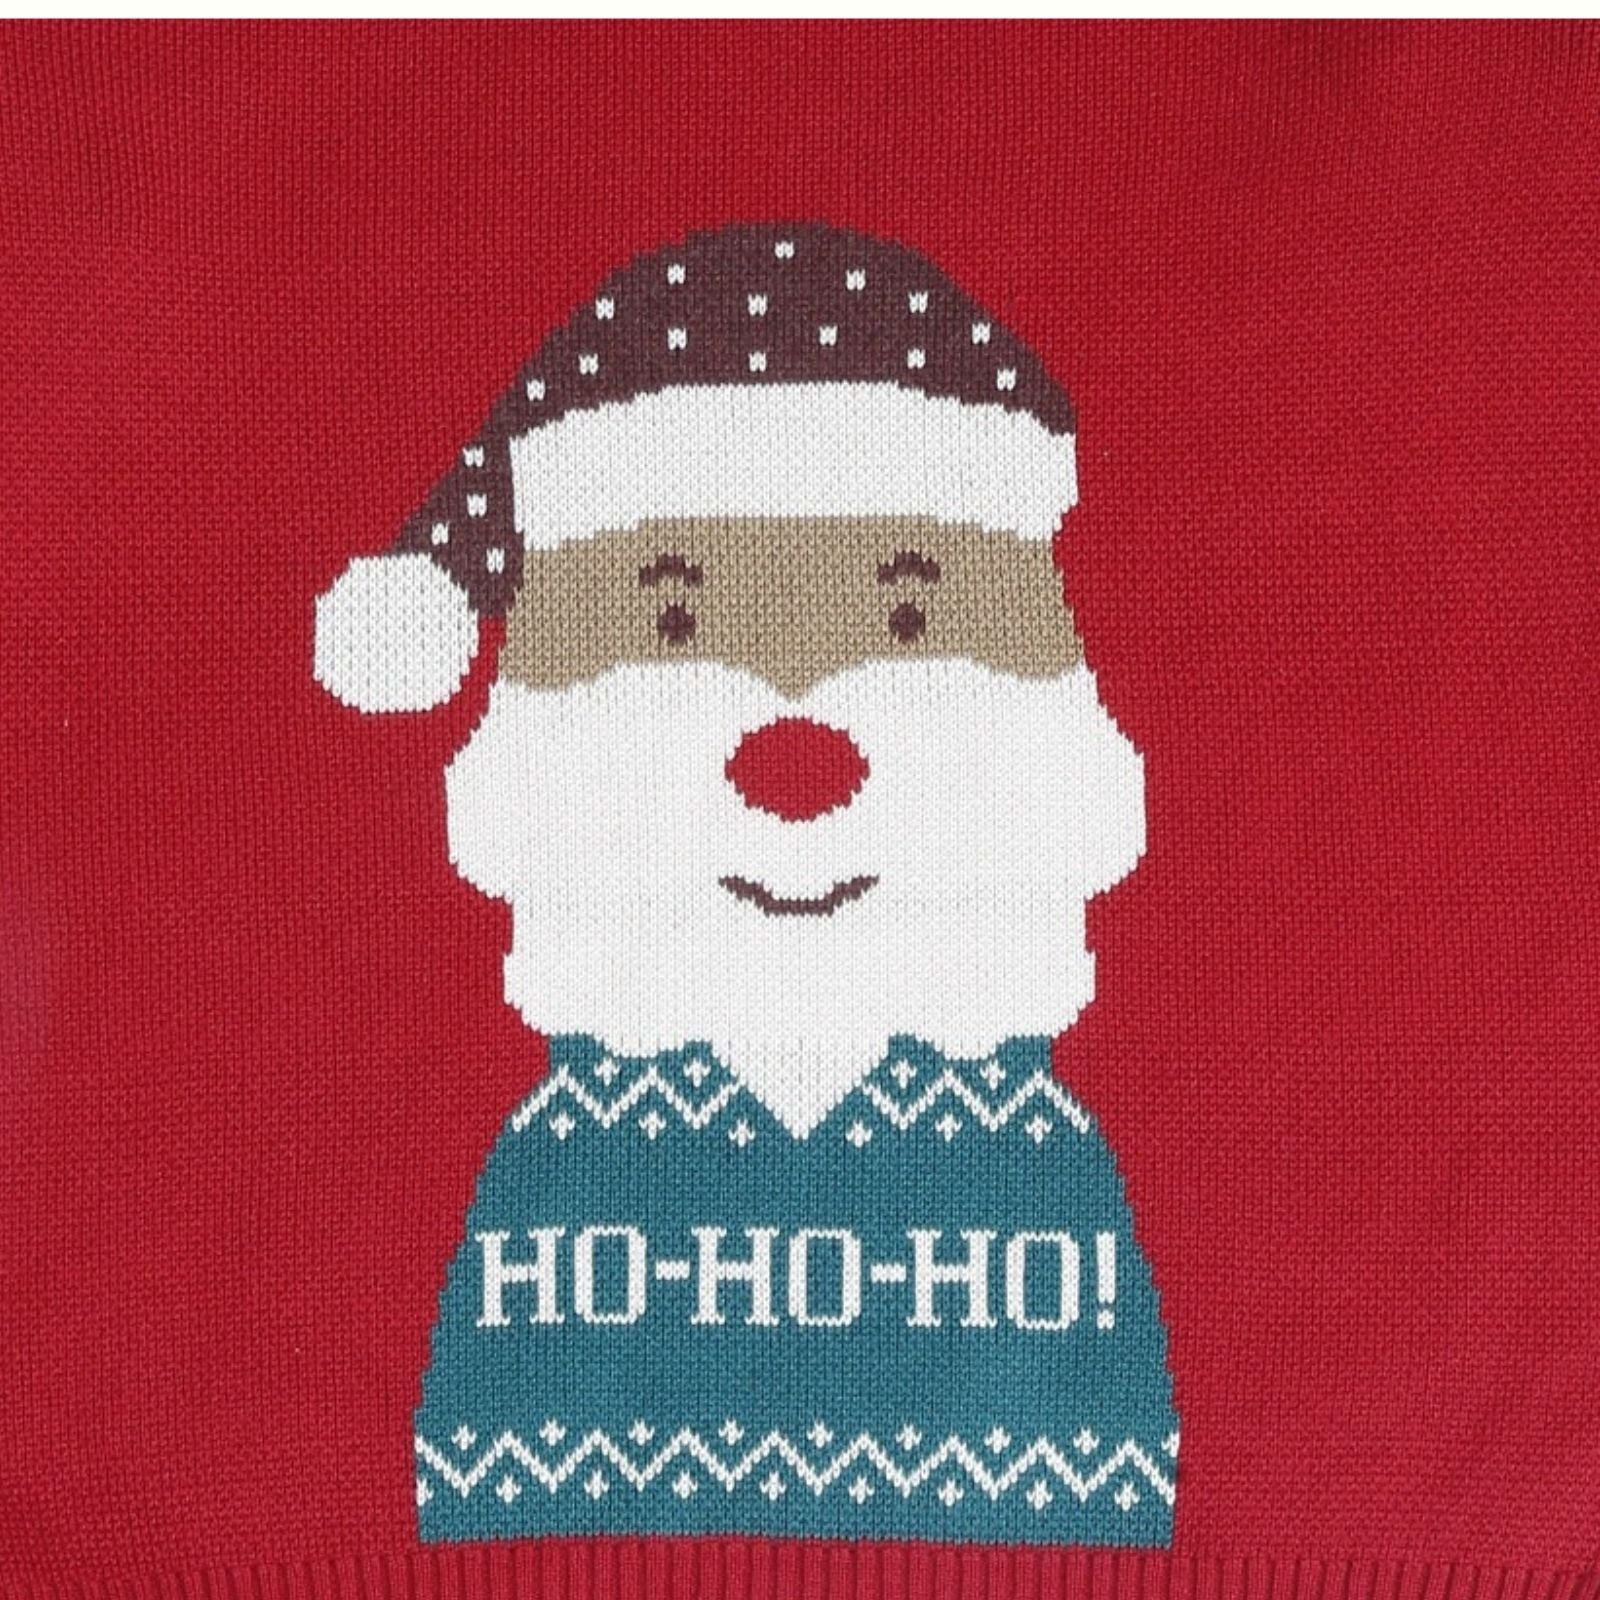 Greendeer Santa & Jaunty/Joyful Reindeer 100% Cotton Sweater Set of 3